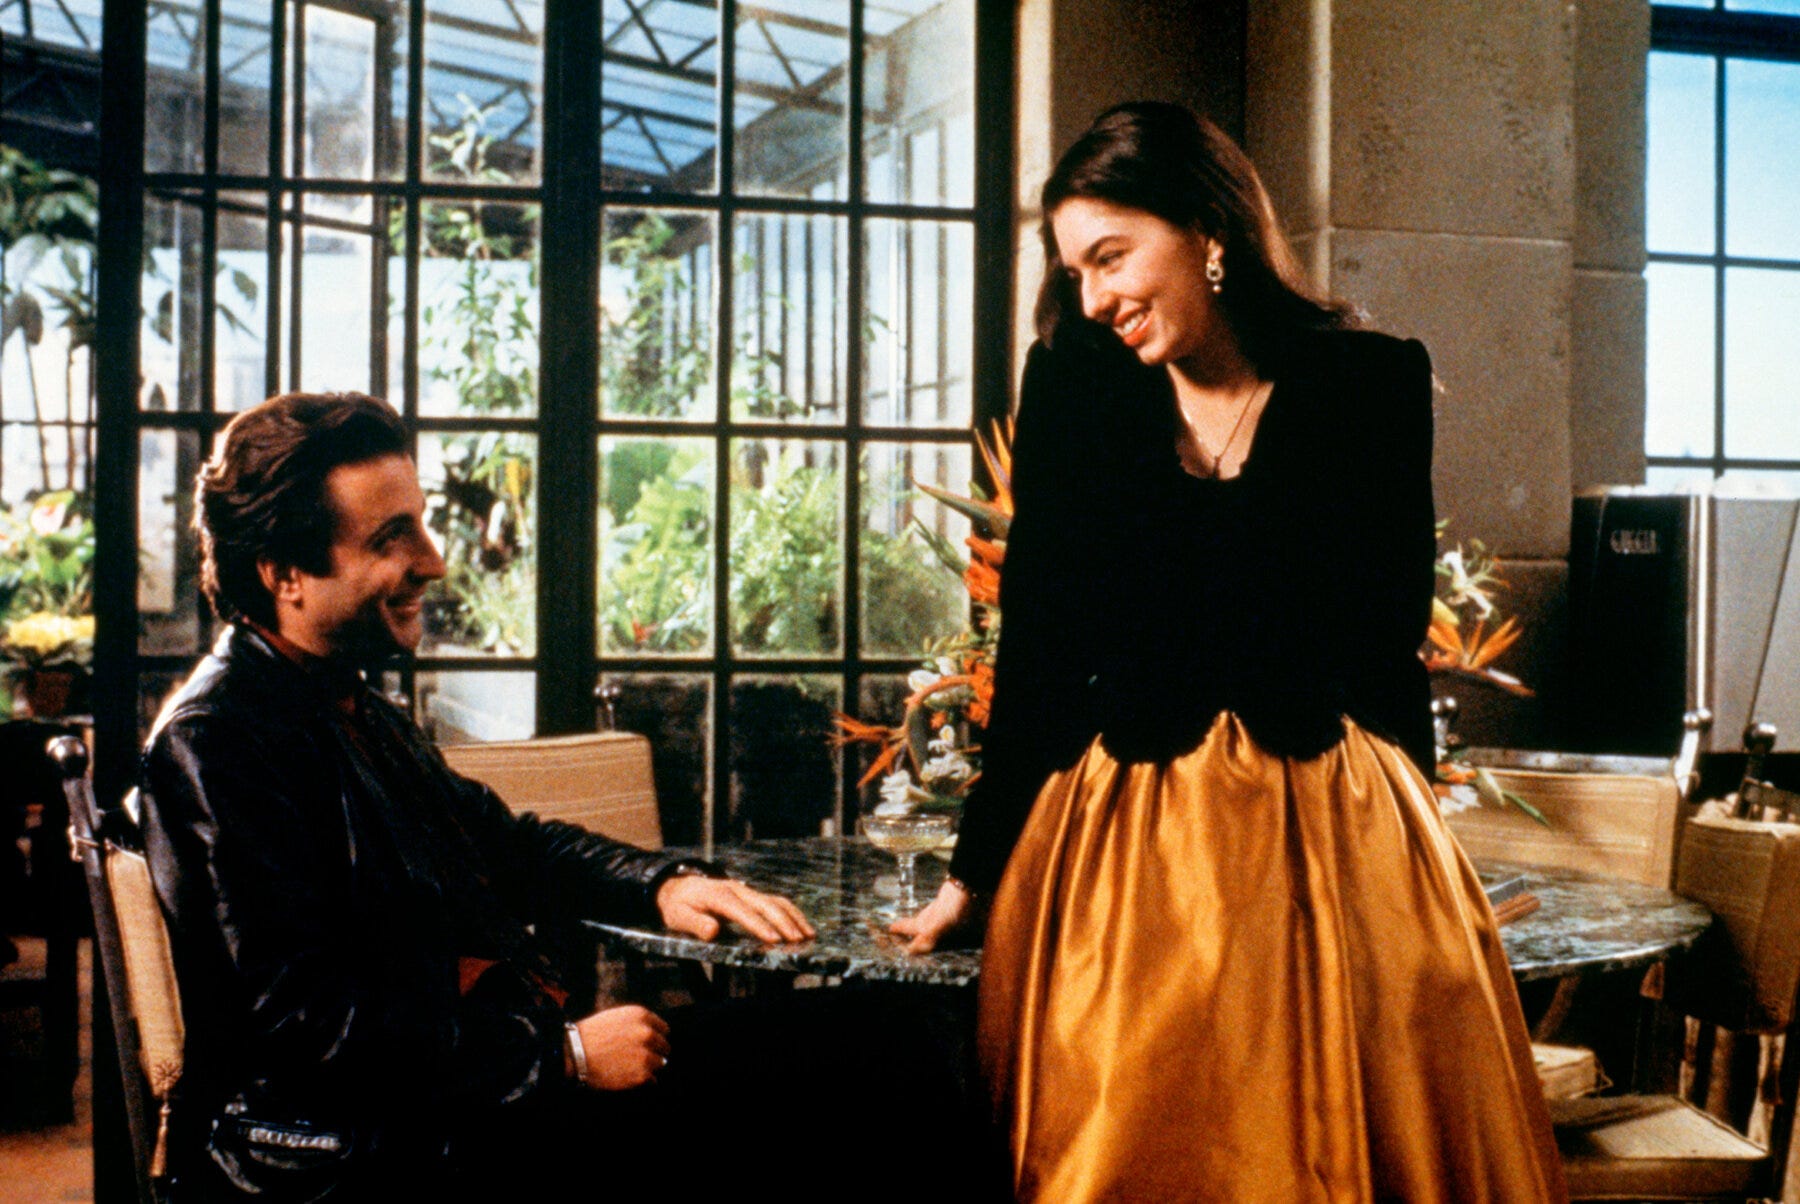 Andy Garcia Explains Winona Ryder 'Godfather III' Exit, Sofia